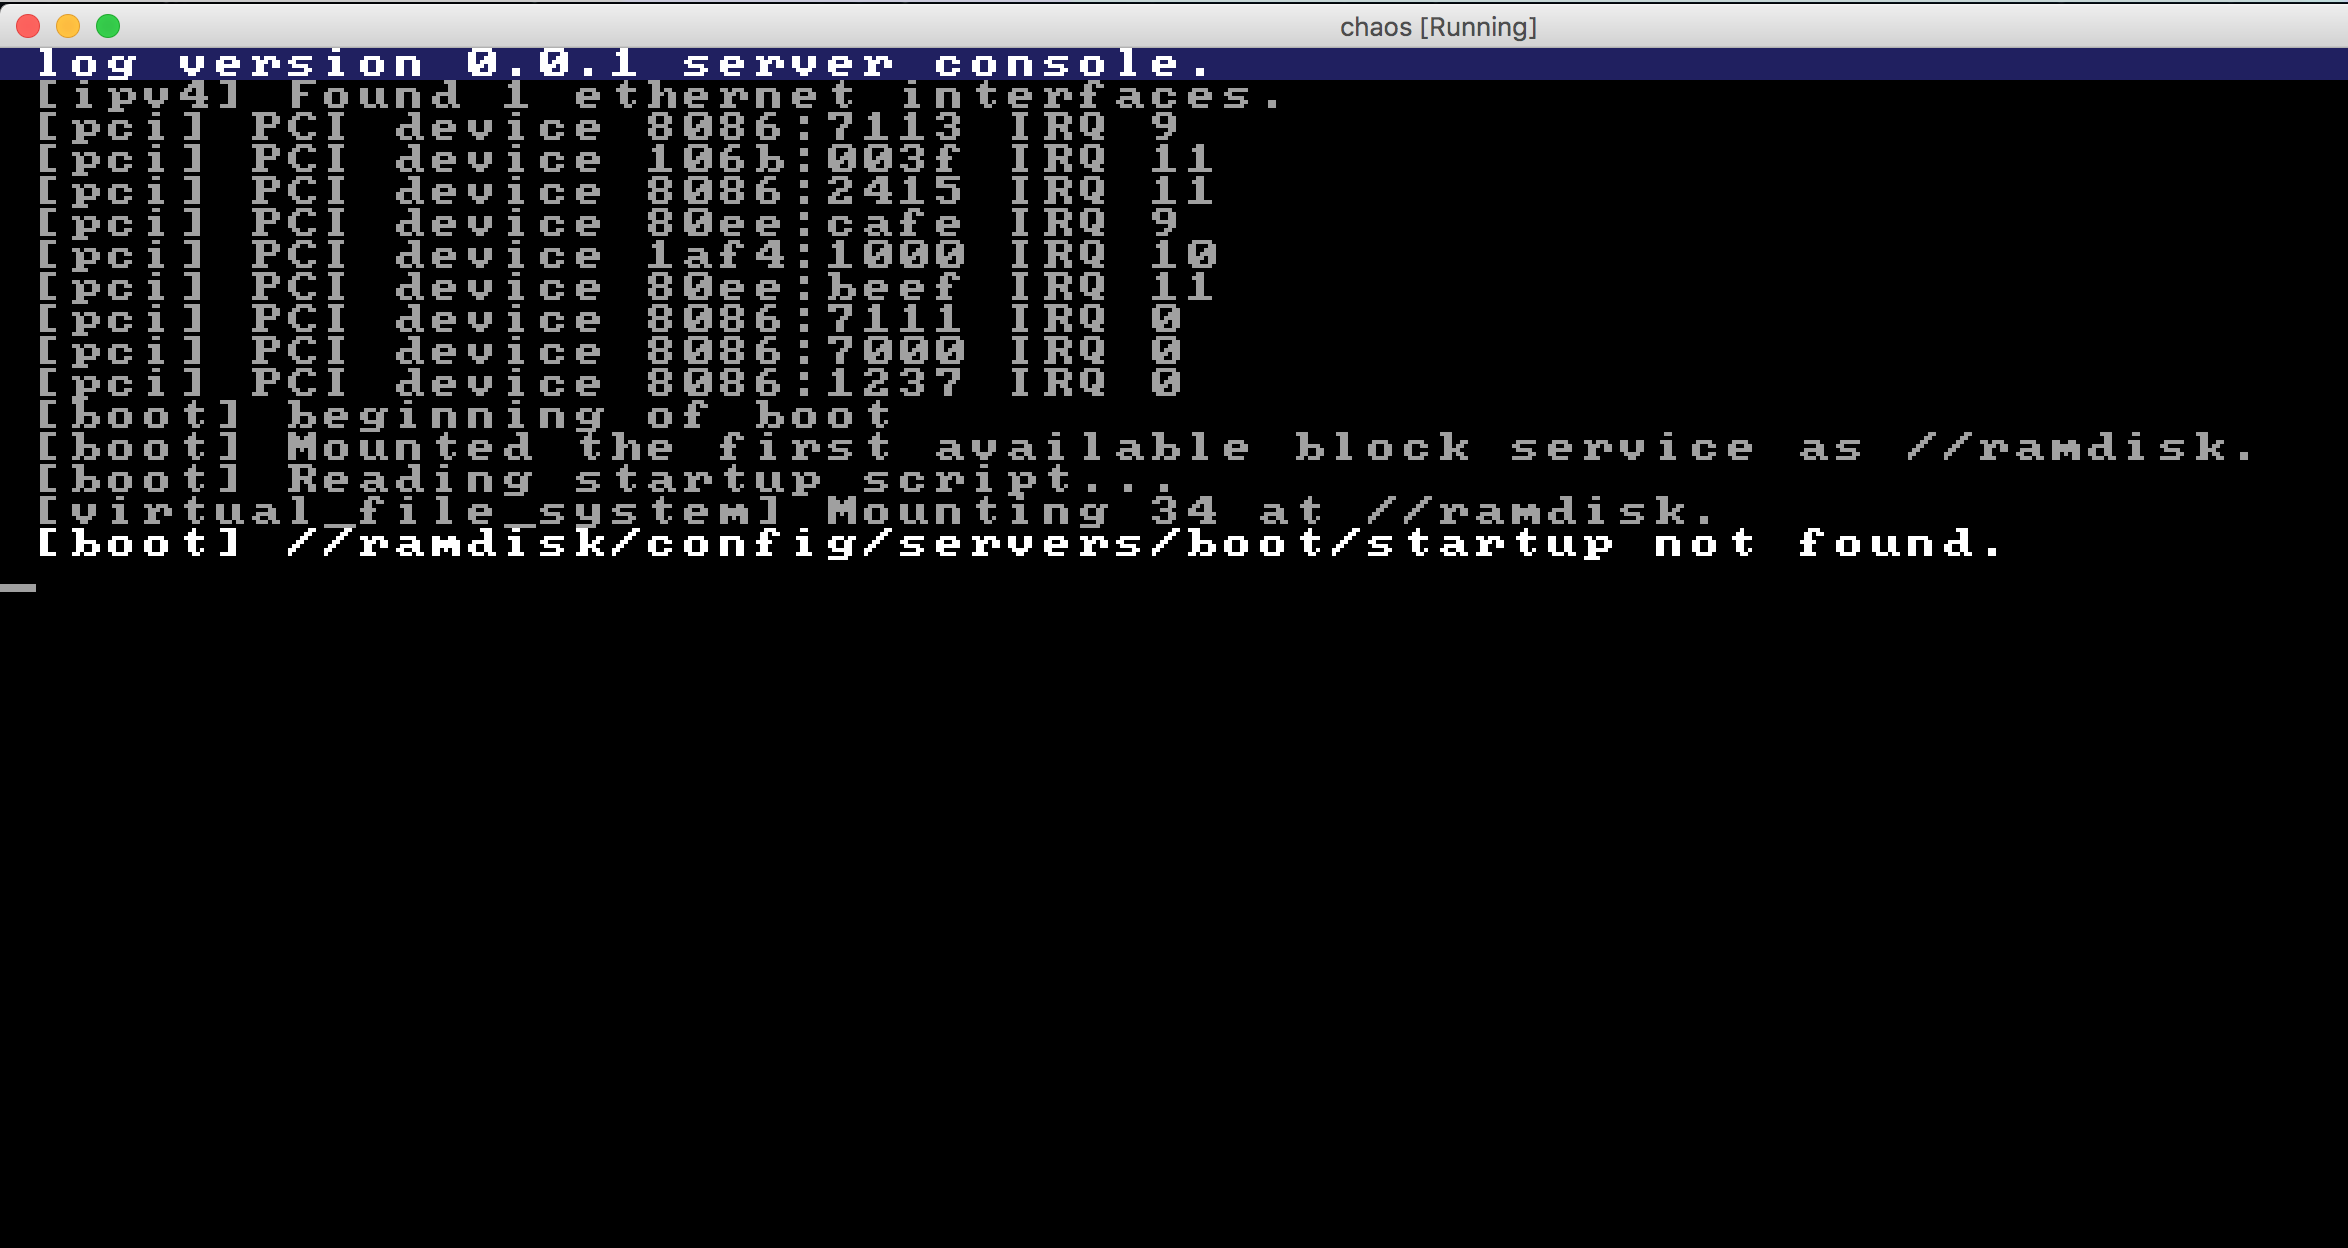 chaos screenshot, failing to read //ramdisk/config/servers/boot/startup